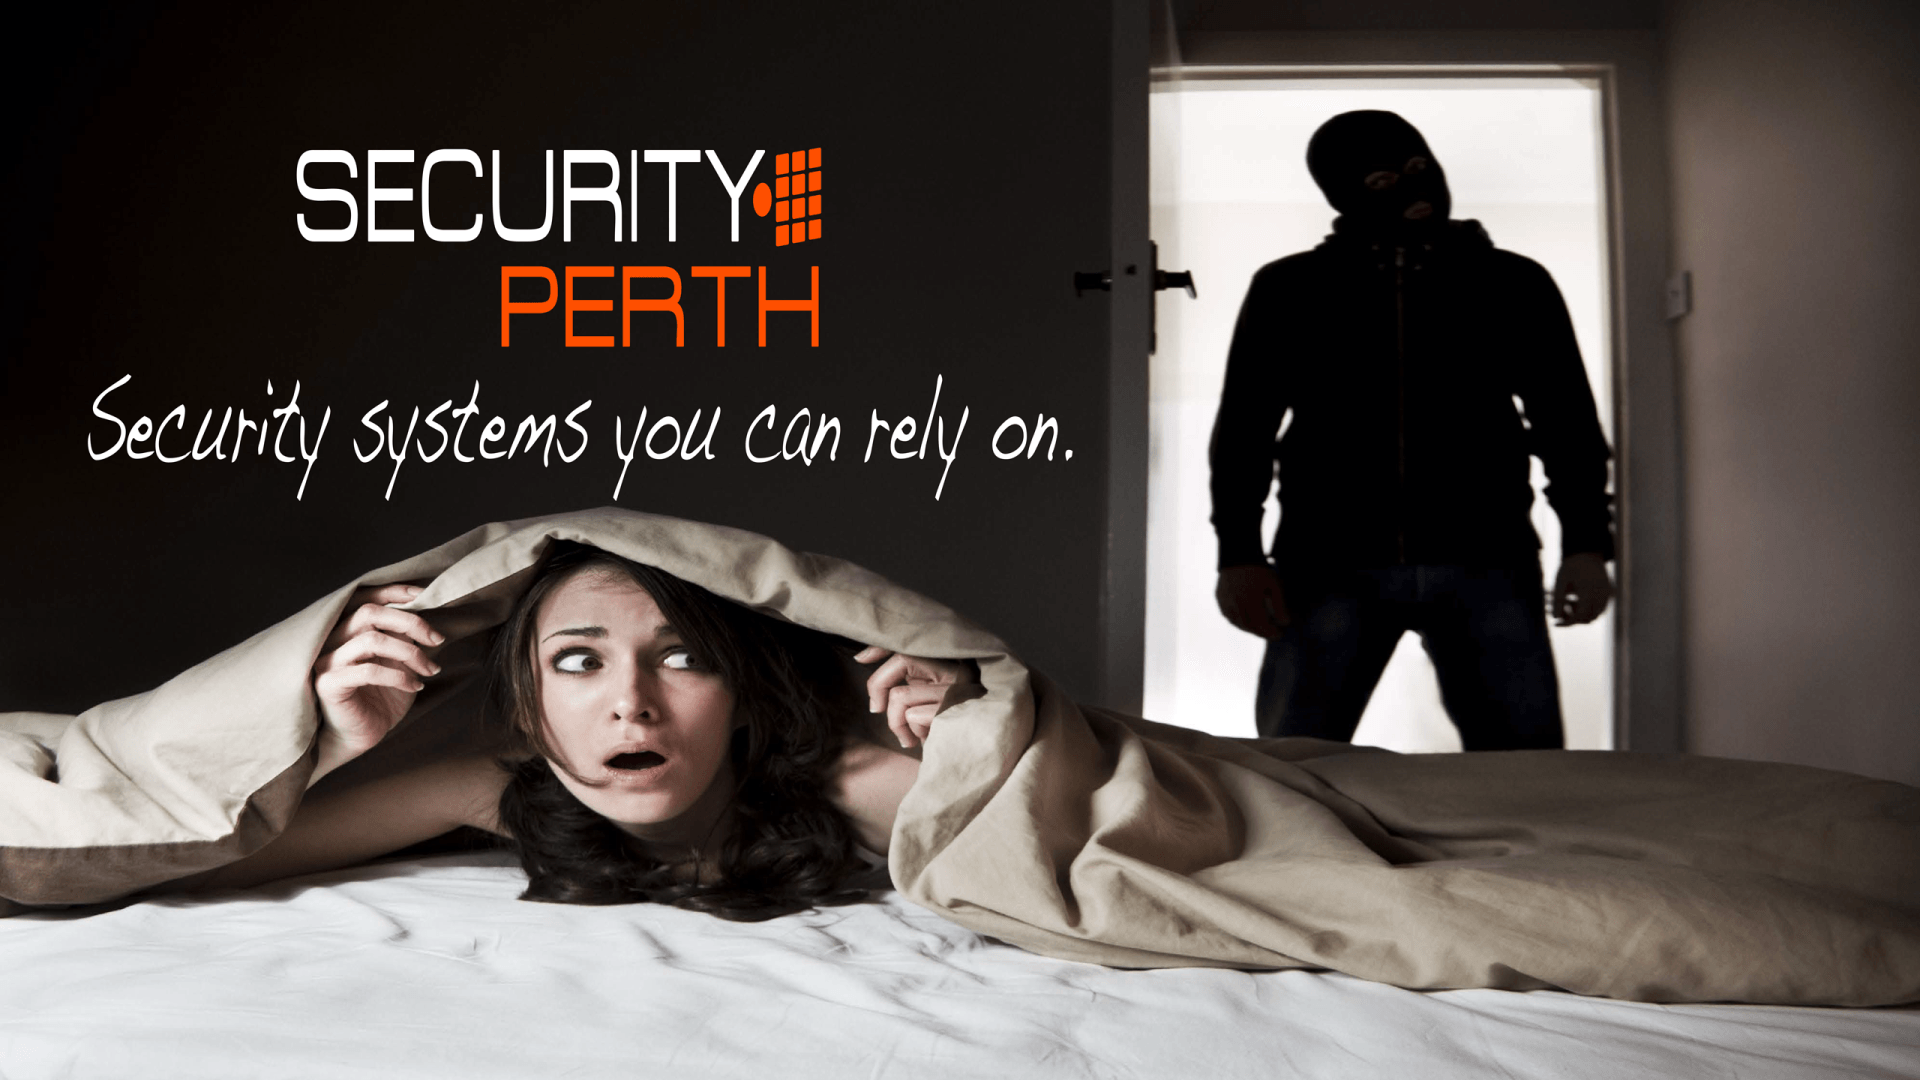 www.securityperth.com.au